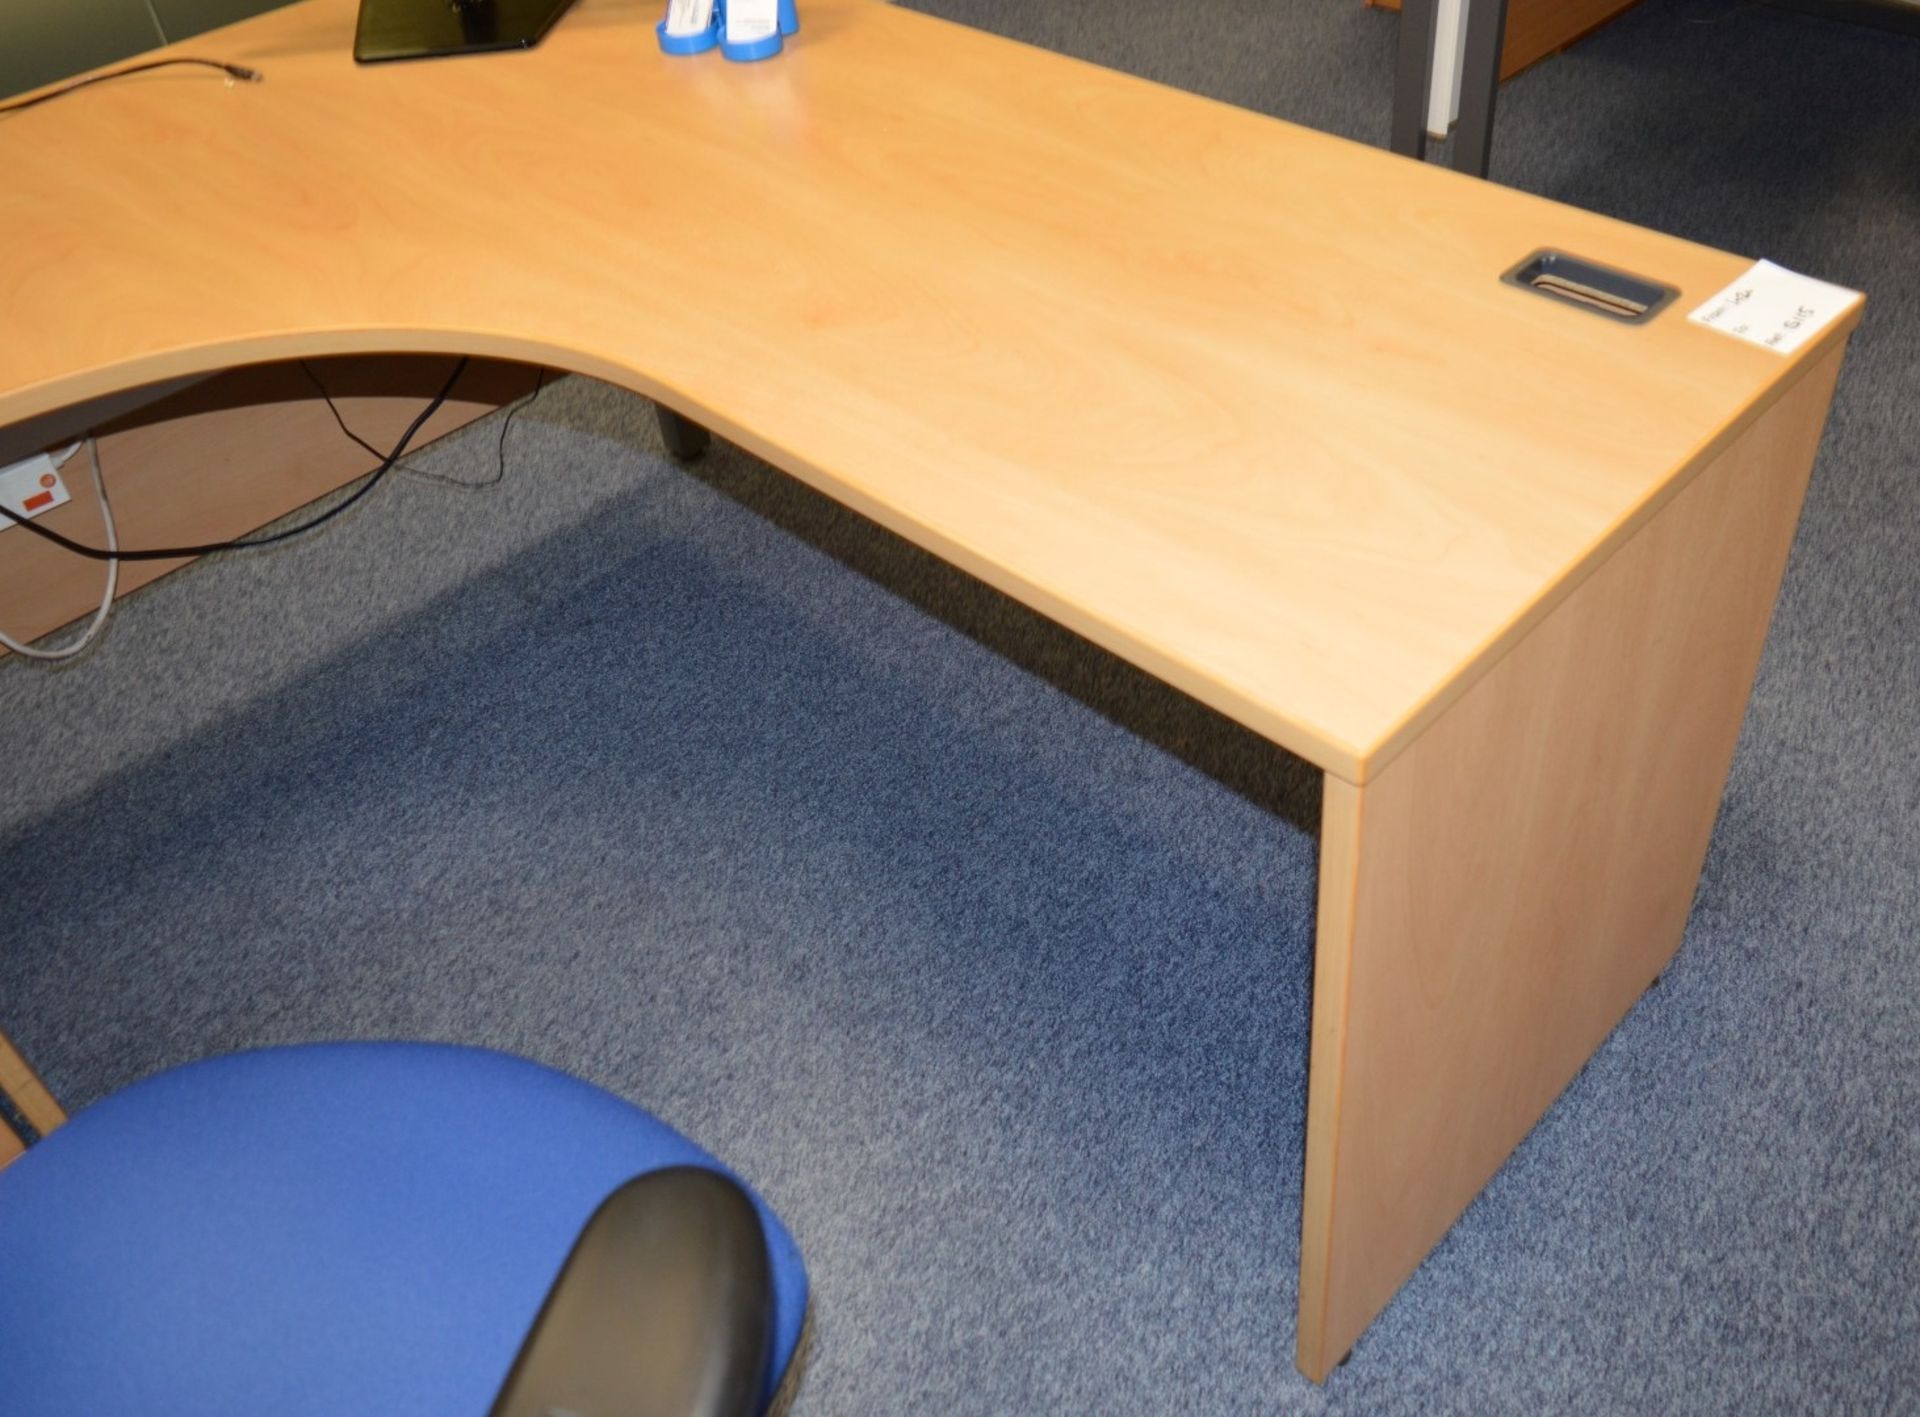 1 x Office Furniture Set Including Large Desk, Drawer Pedestal, Swivel Chair and Shelving Unit - - Image 8 of 10